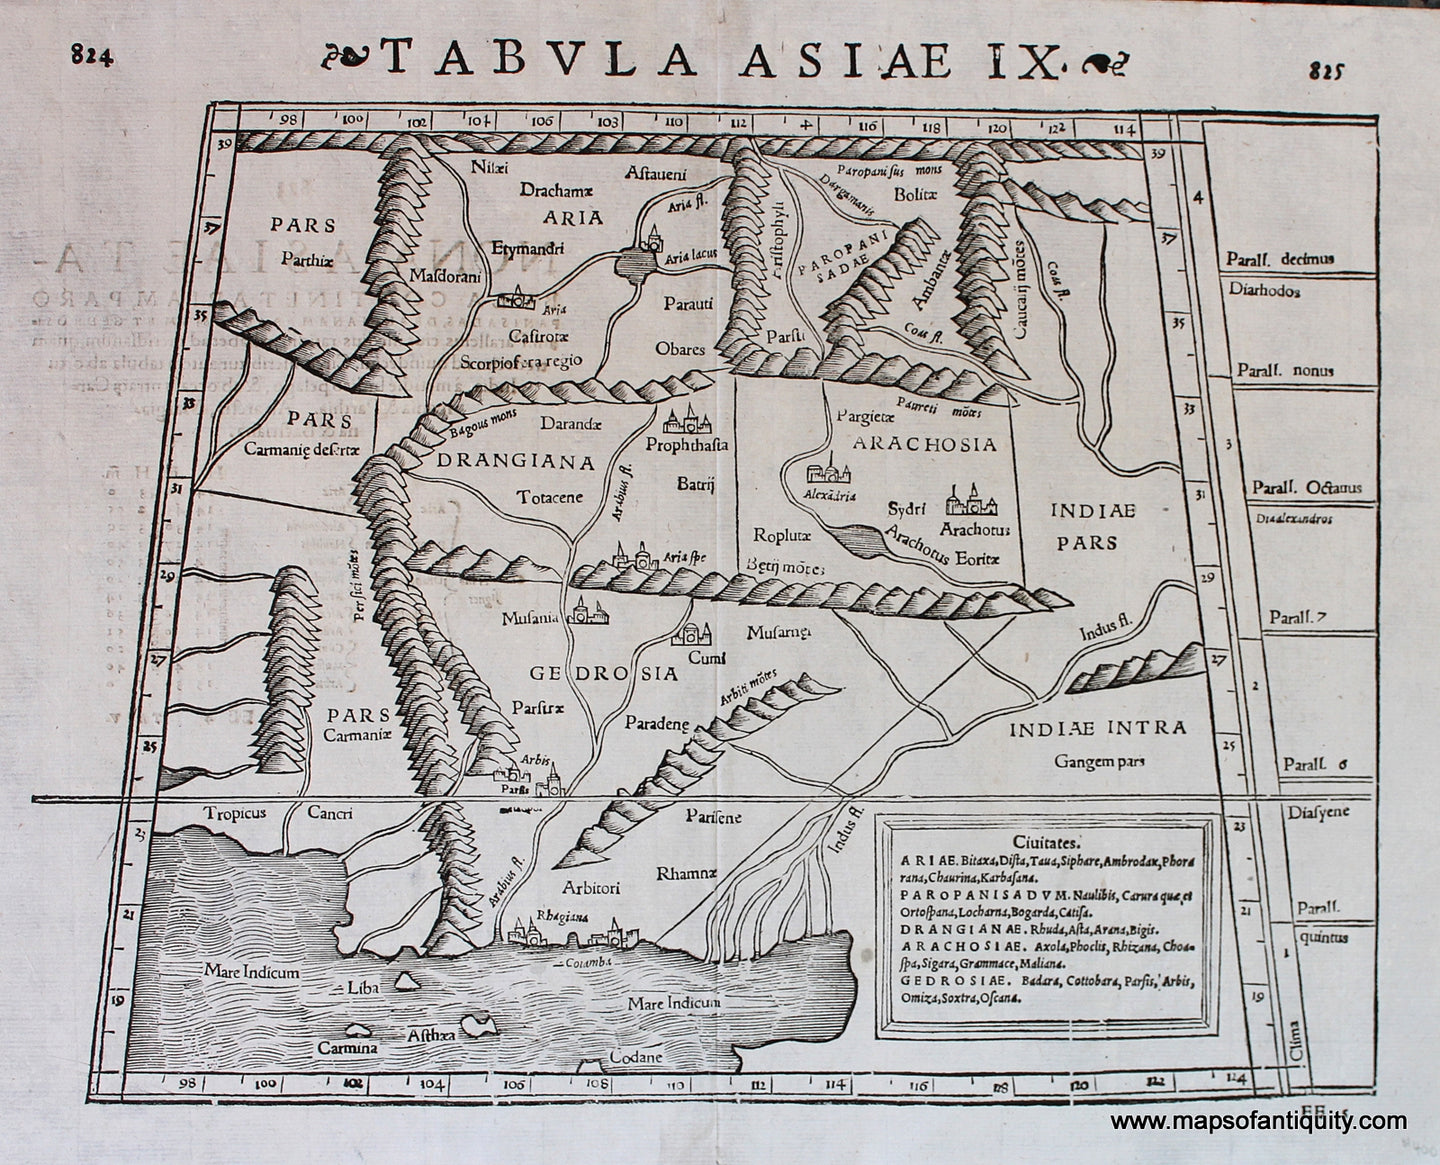 Antique-Black-and-White-Engraved-Map-Tabula-Asiae-IX-Strabonis-Asia-Asia--1542-Munster-Maps-Of-Antiquity